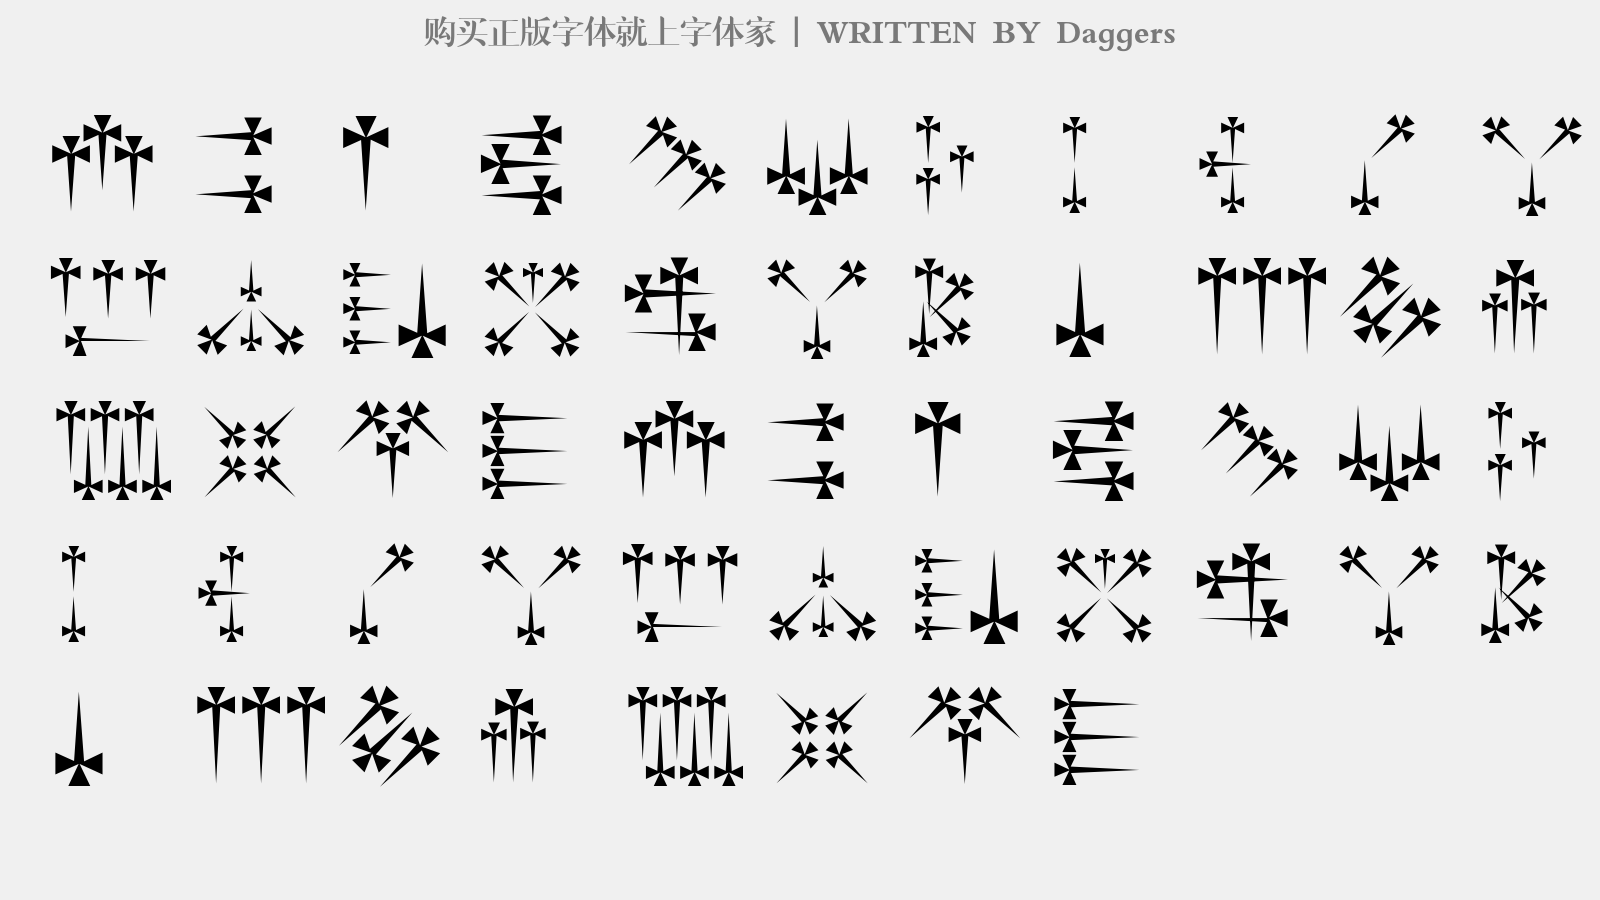 Daggers - 大写字母/小写字母/数字